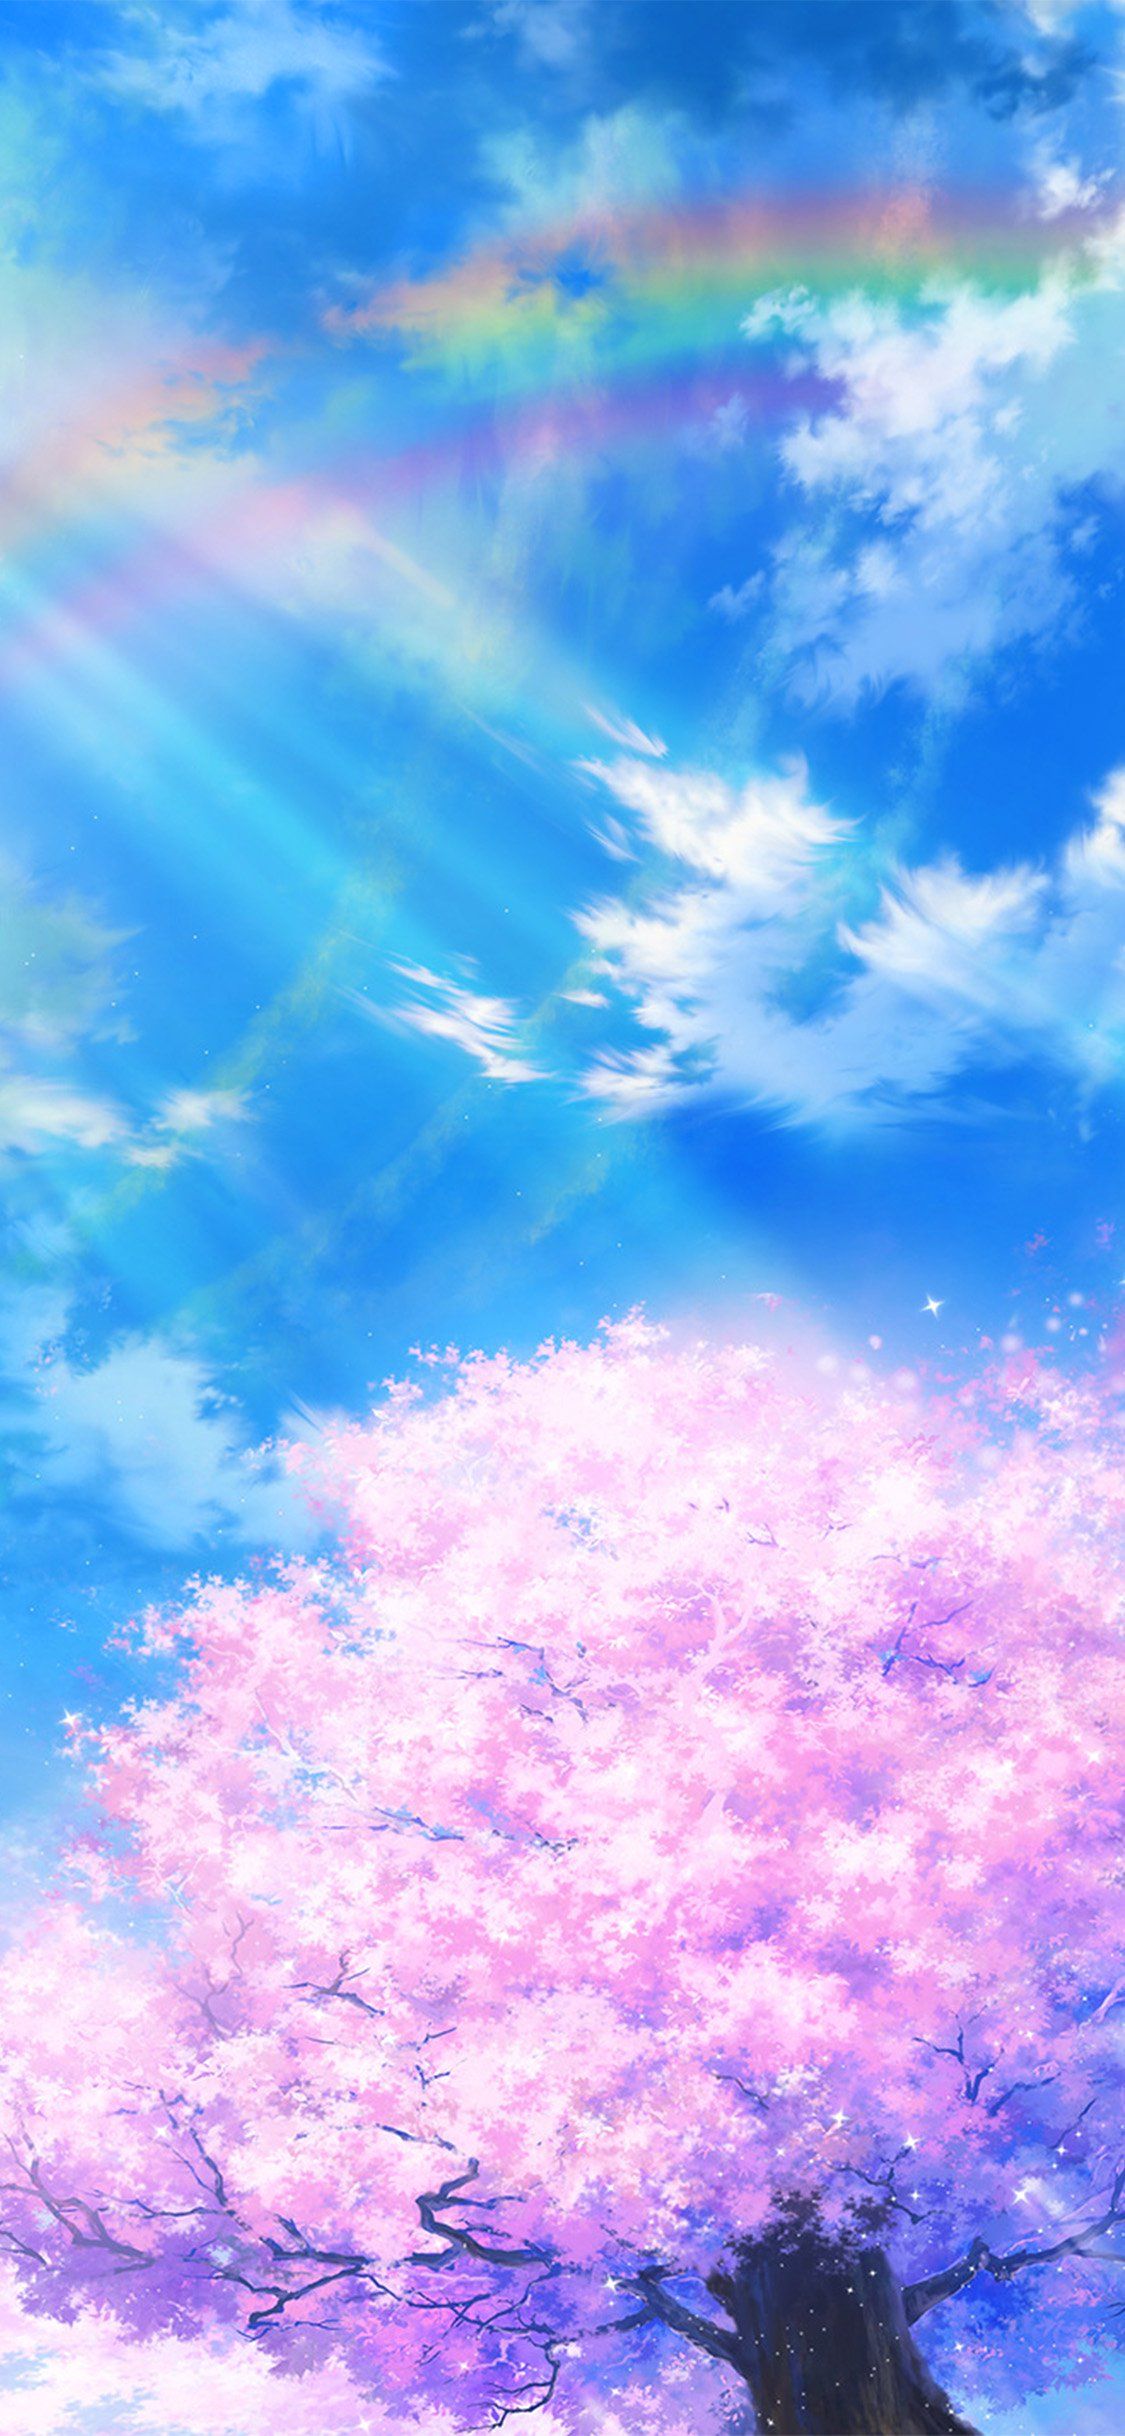 Anime sky cloud spring art illustration iPhone X Wallpaper Free